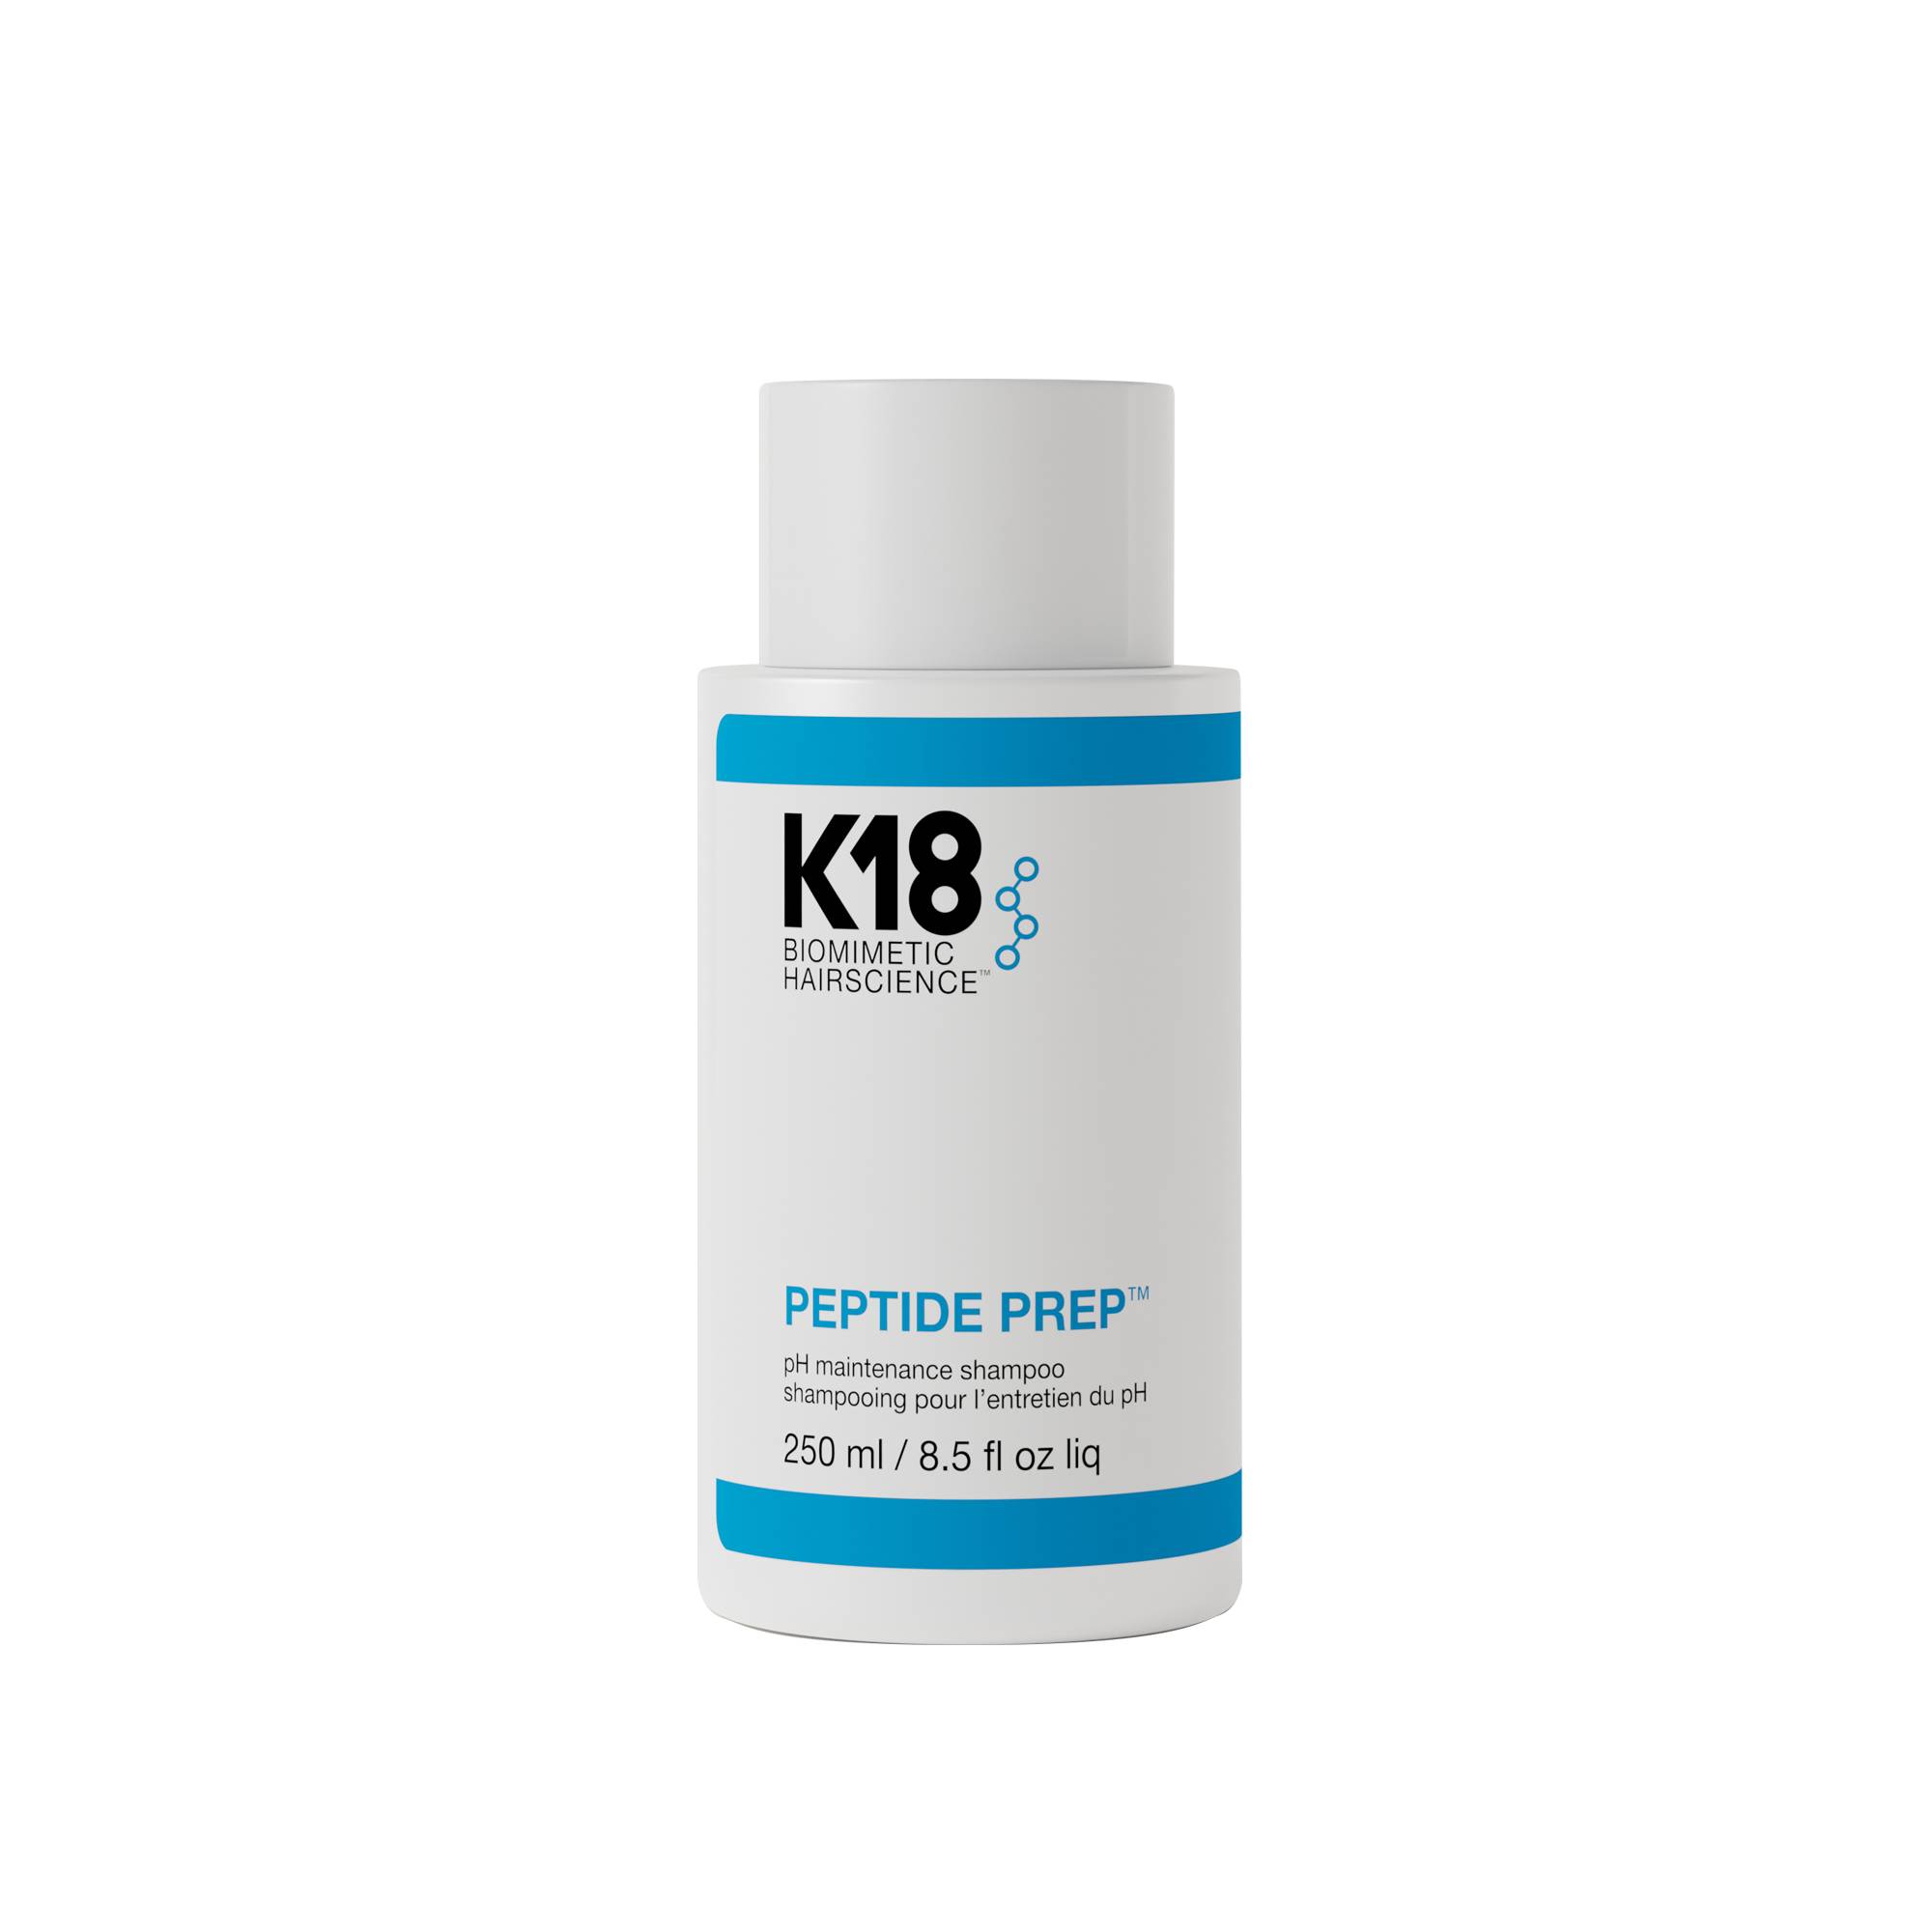 Shampoing entretien pH Peptide Prep™ de la marque K18 Biomimetic HairScience Contenance 250ml - 1